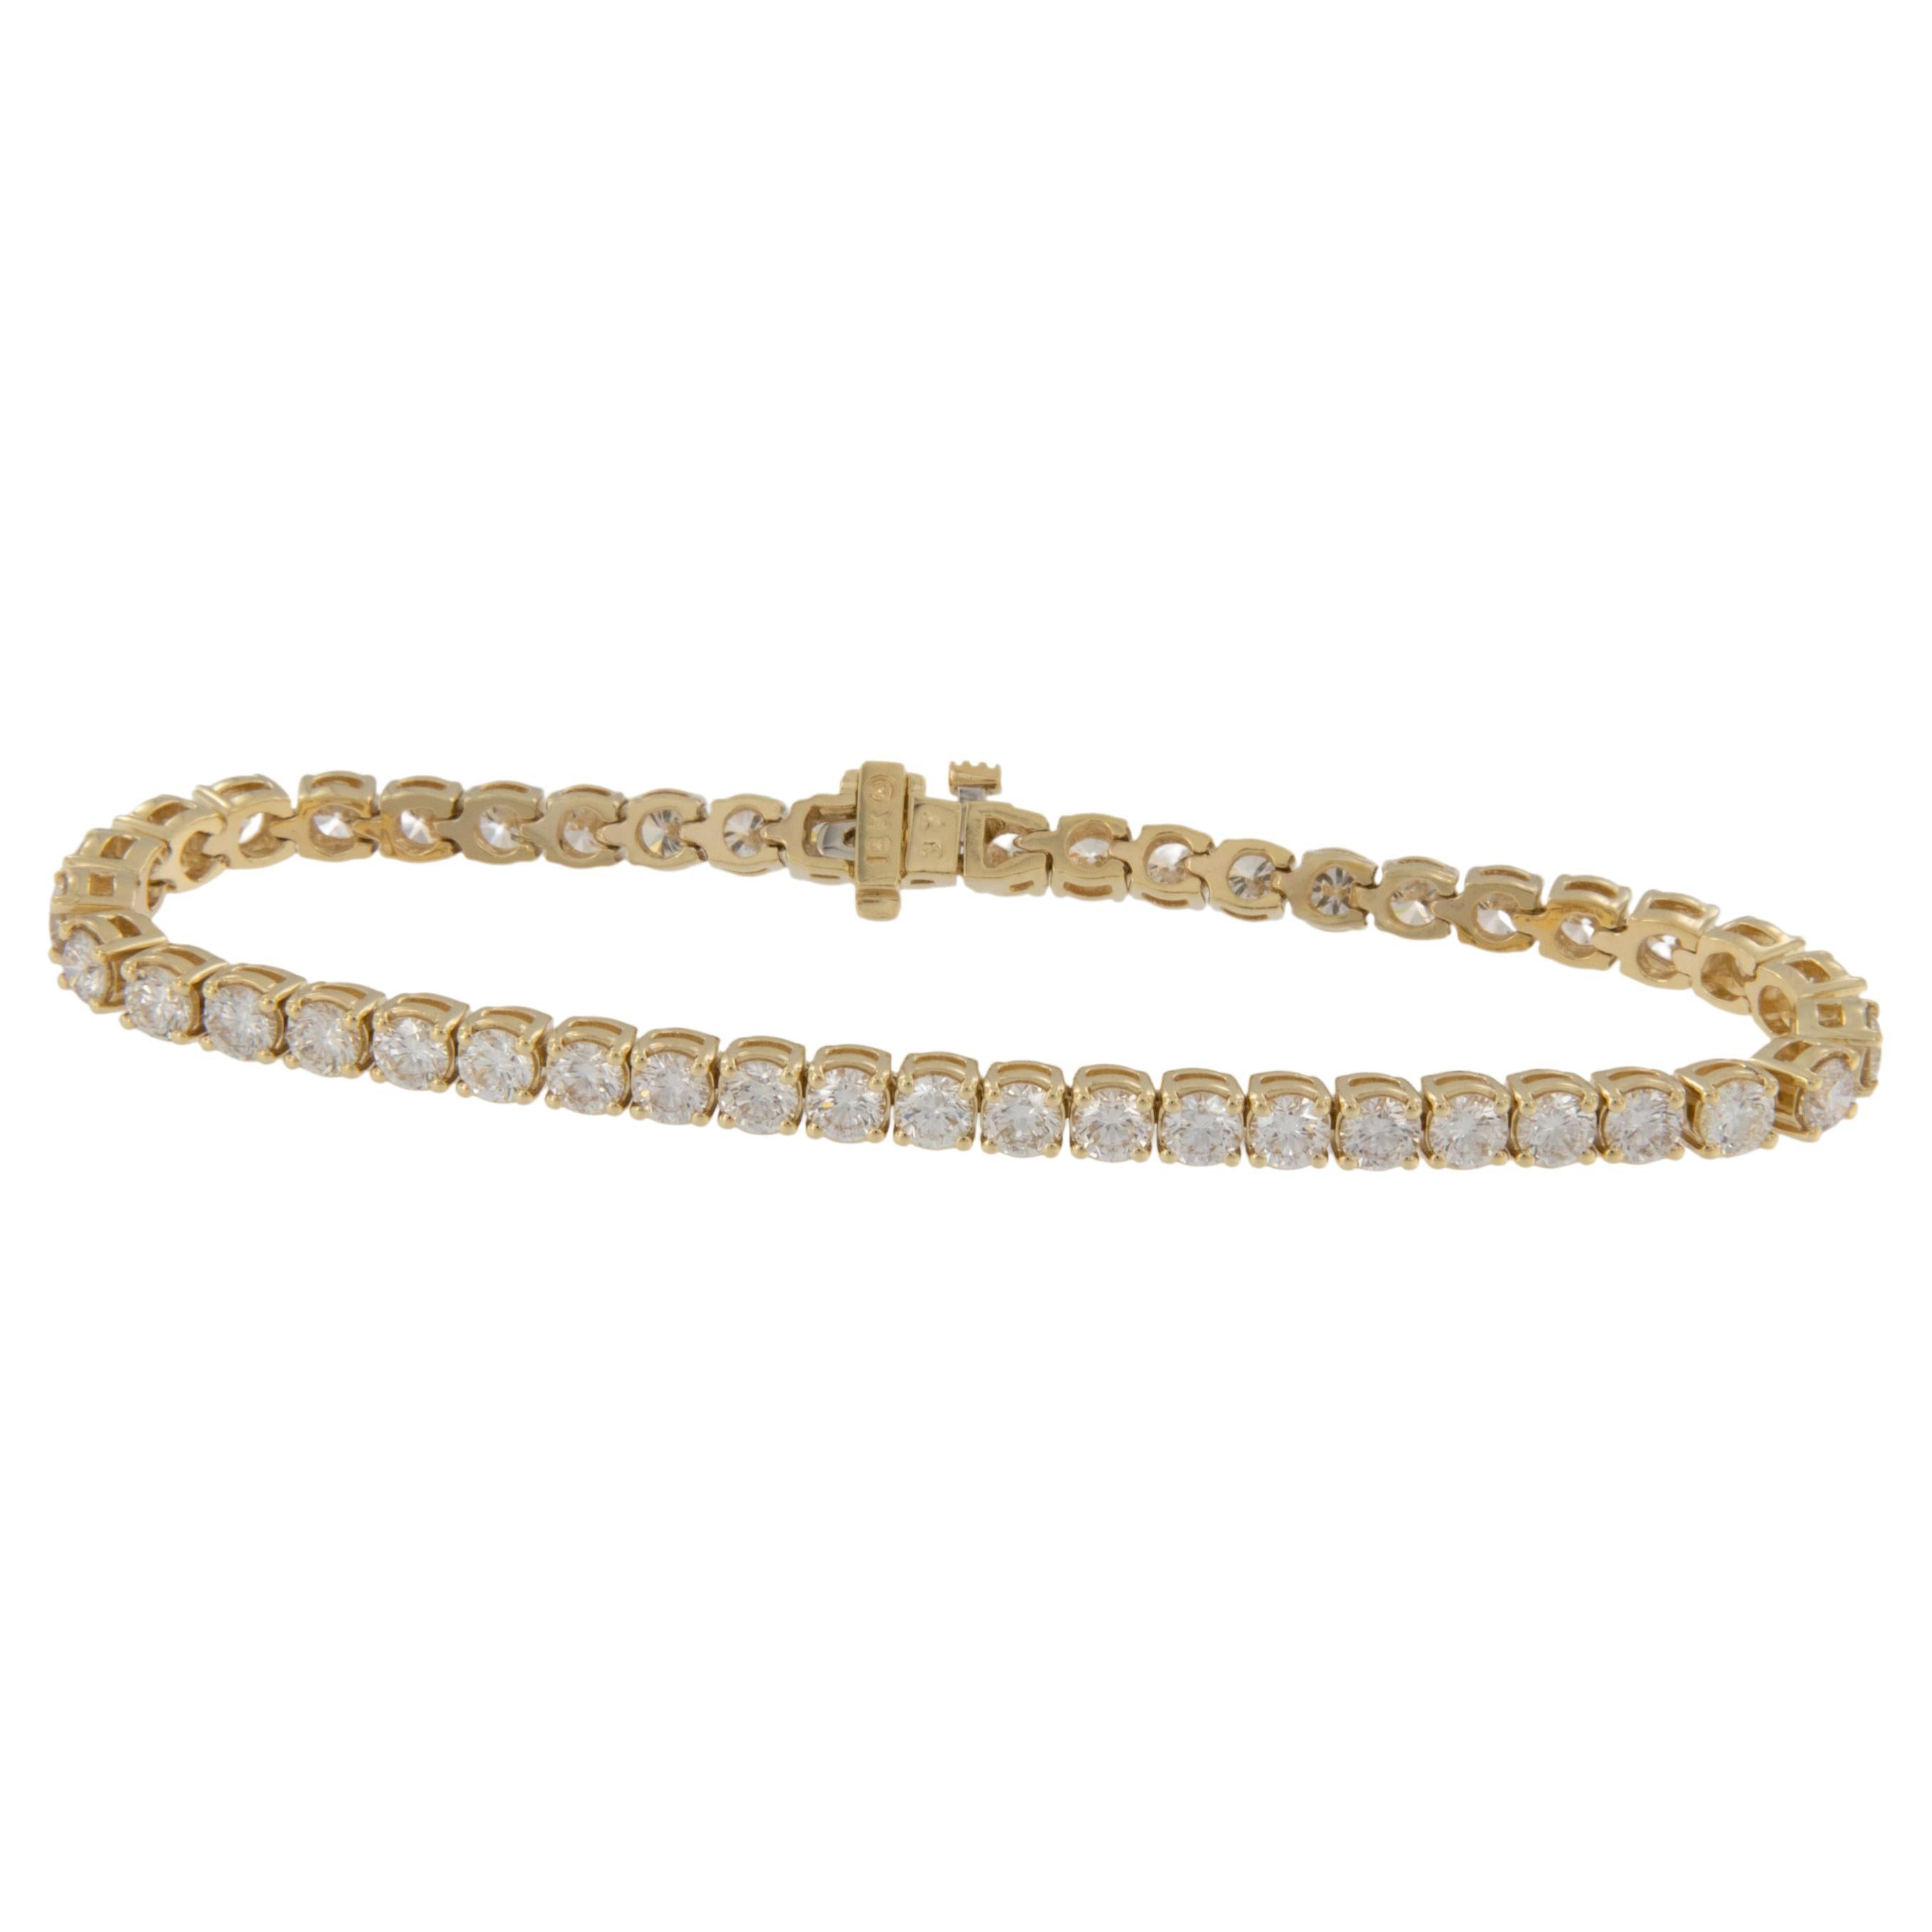 Bracelet tennis en or jaune 18 carats avec diamants naturels de 7,32 carats